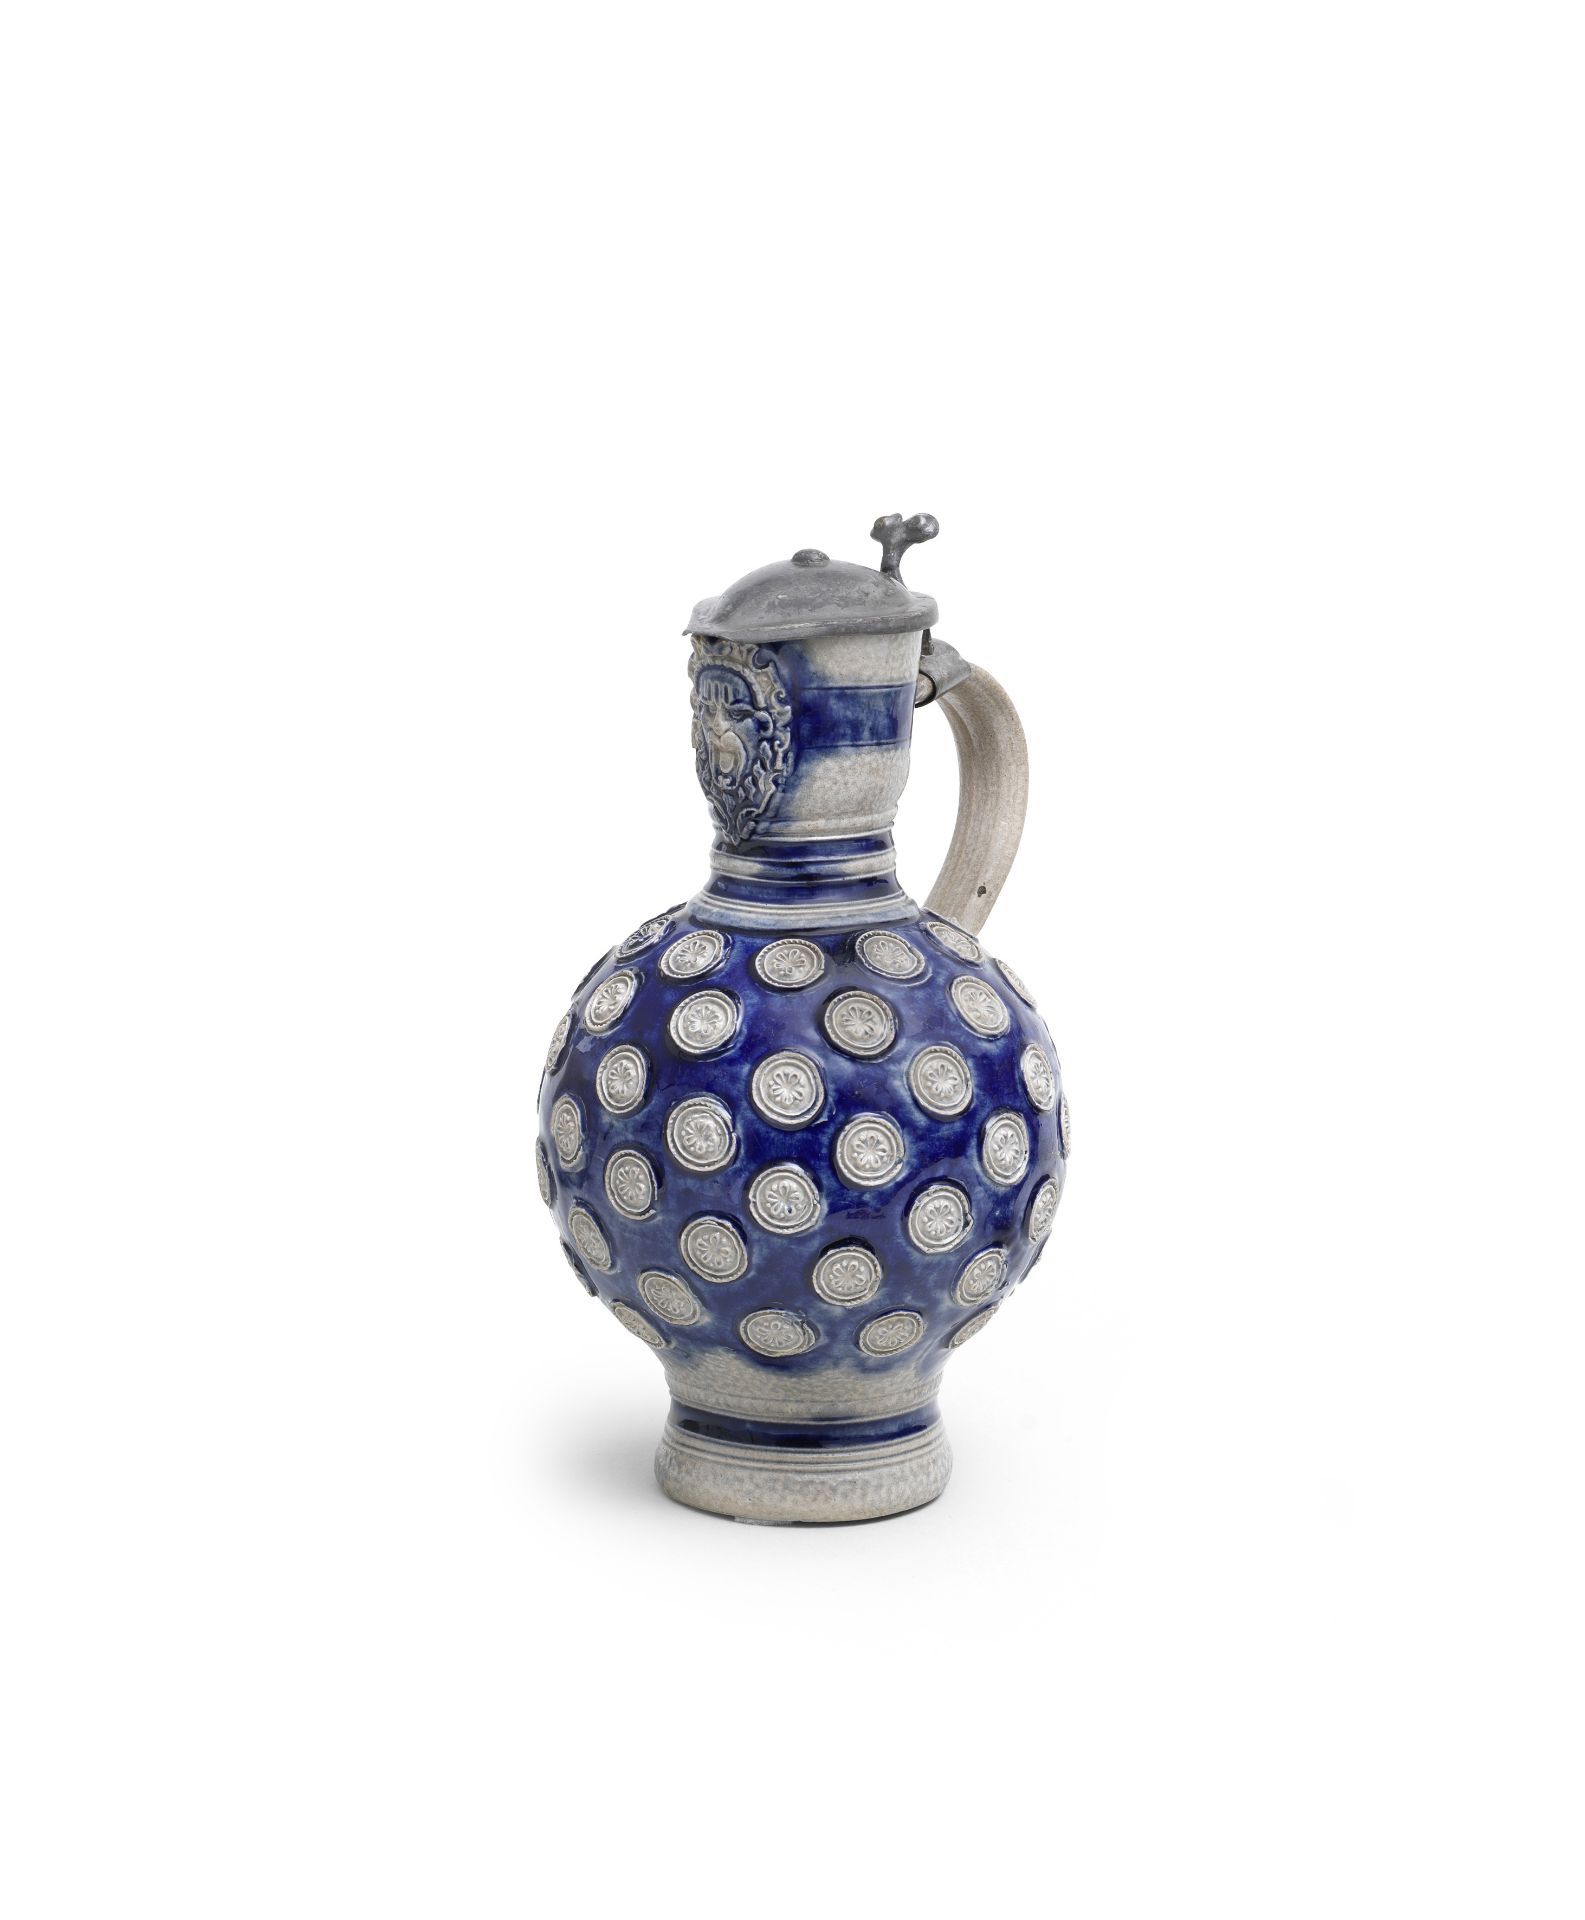 A Westerwald stoneware pewter-mounted jug (Enghalskanne), 2nd half 17th century